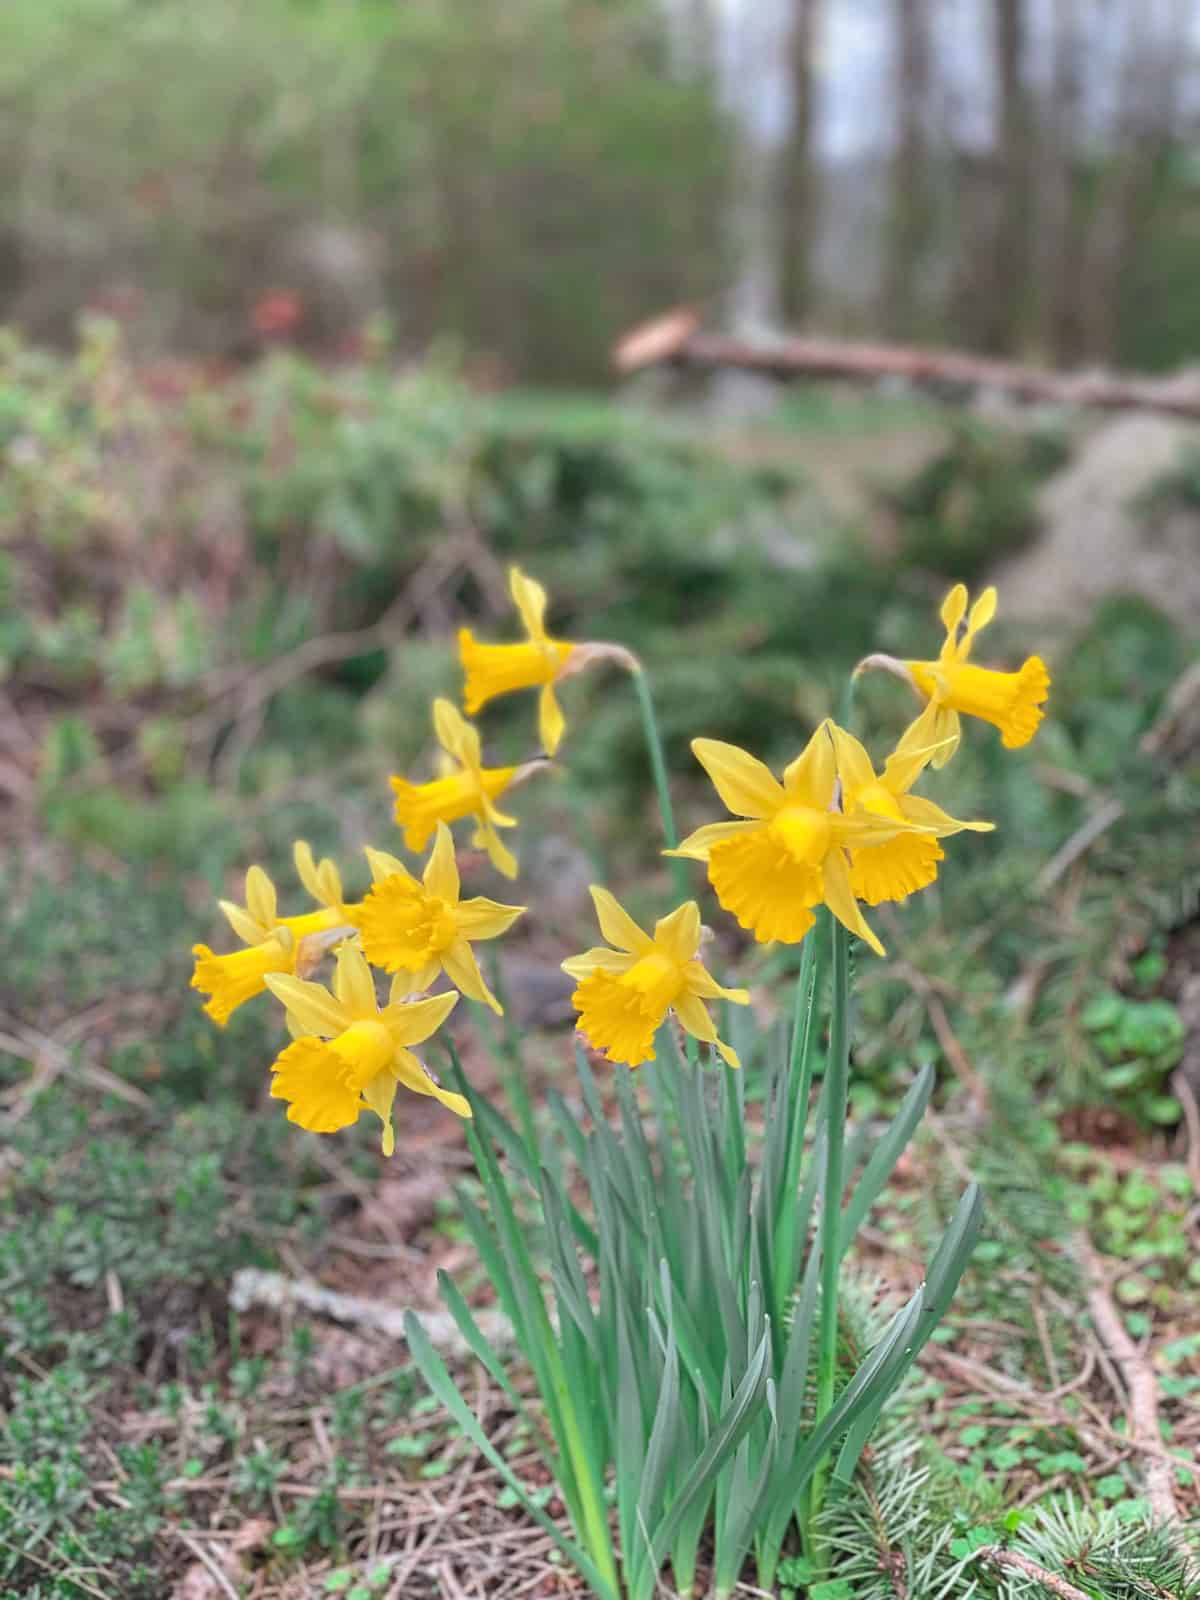 daffodils amongst weeds.